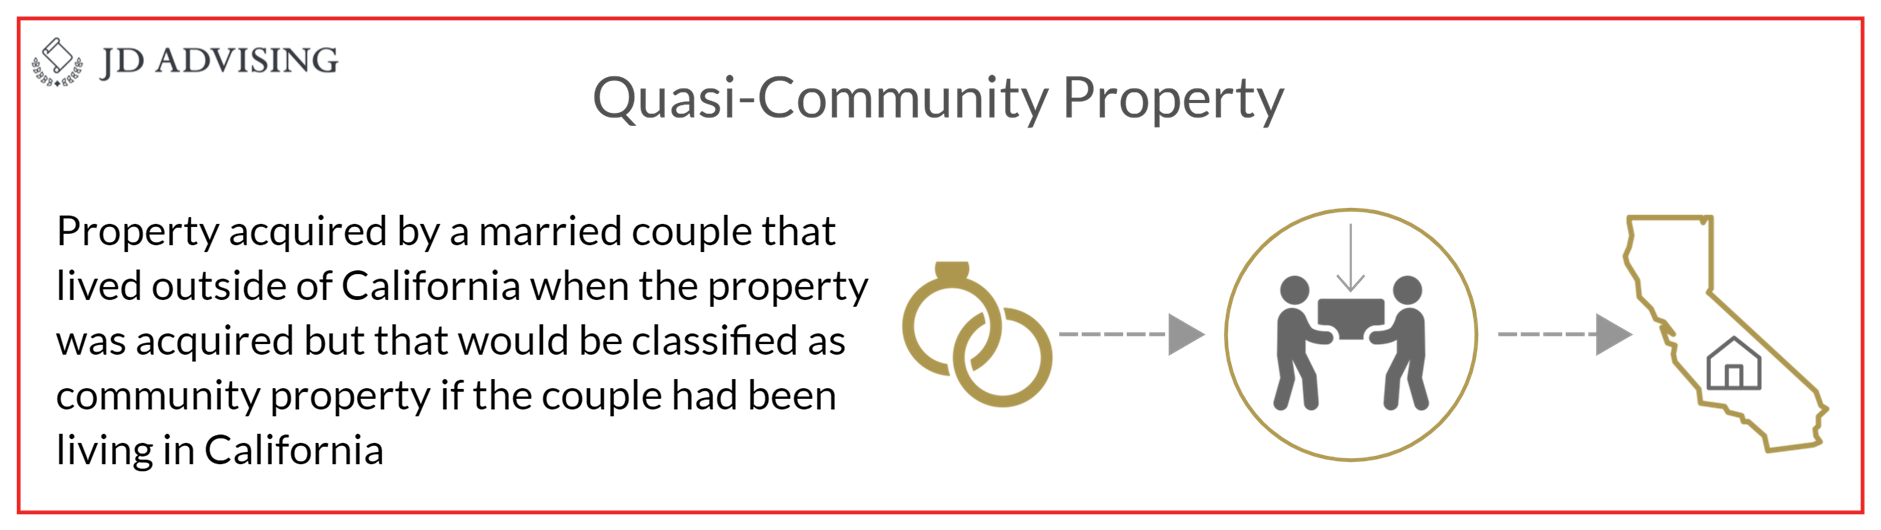 Quasi-community property